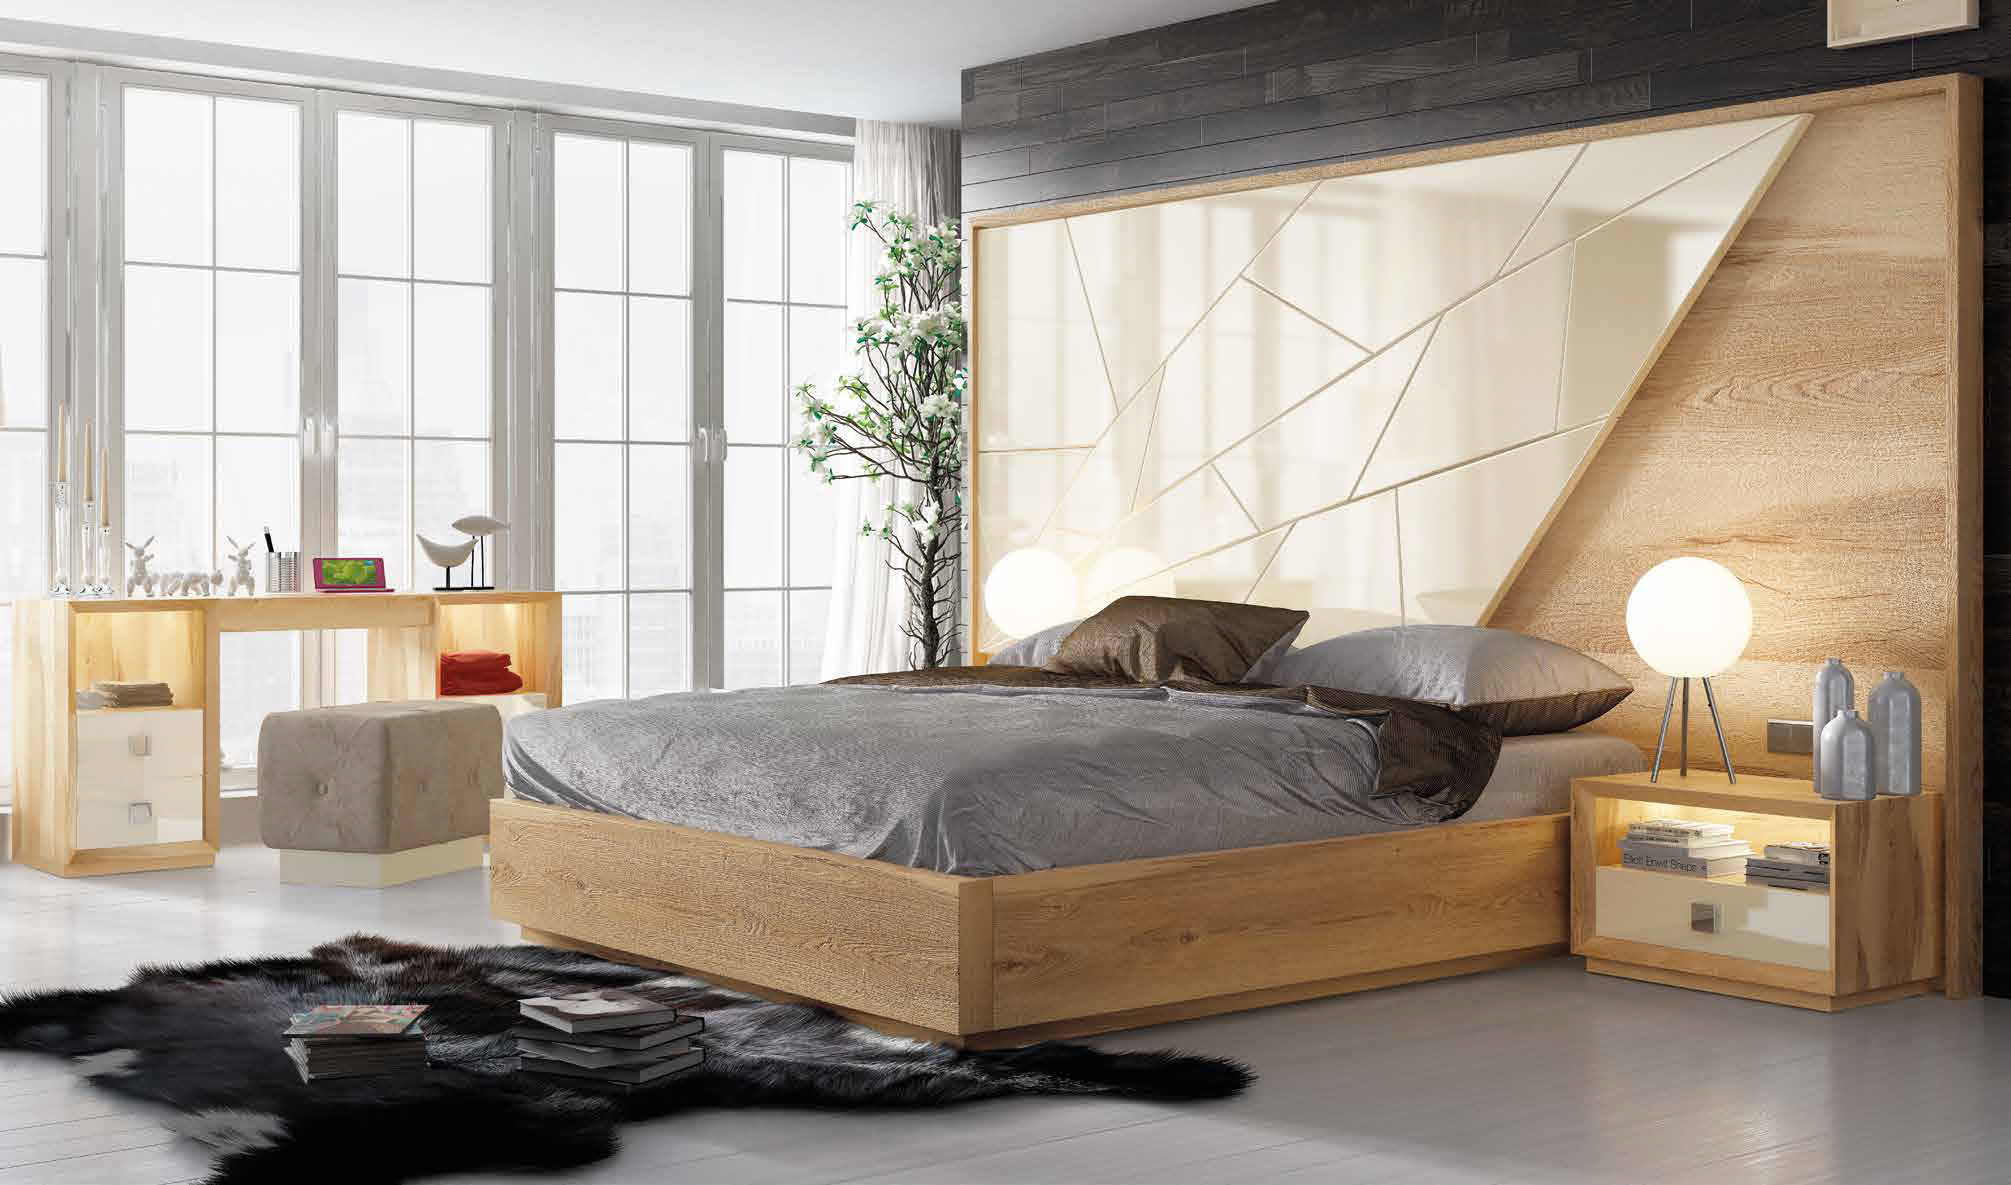 Brands Franco Furniture Bedrooms vol3, Spain DOR 47